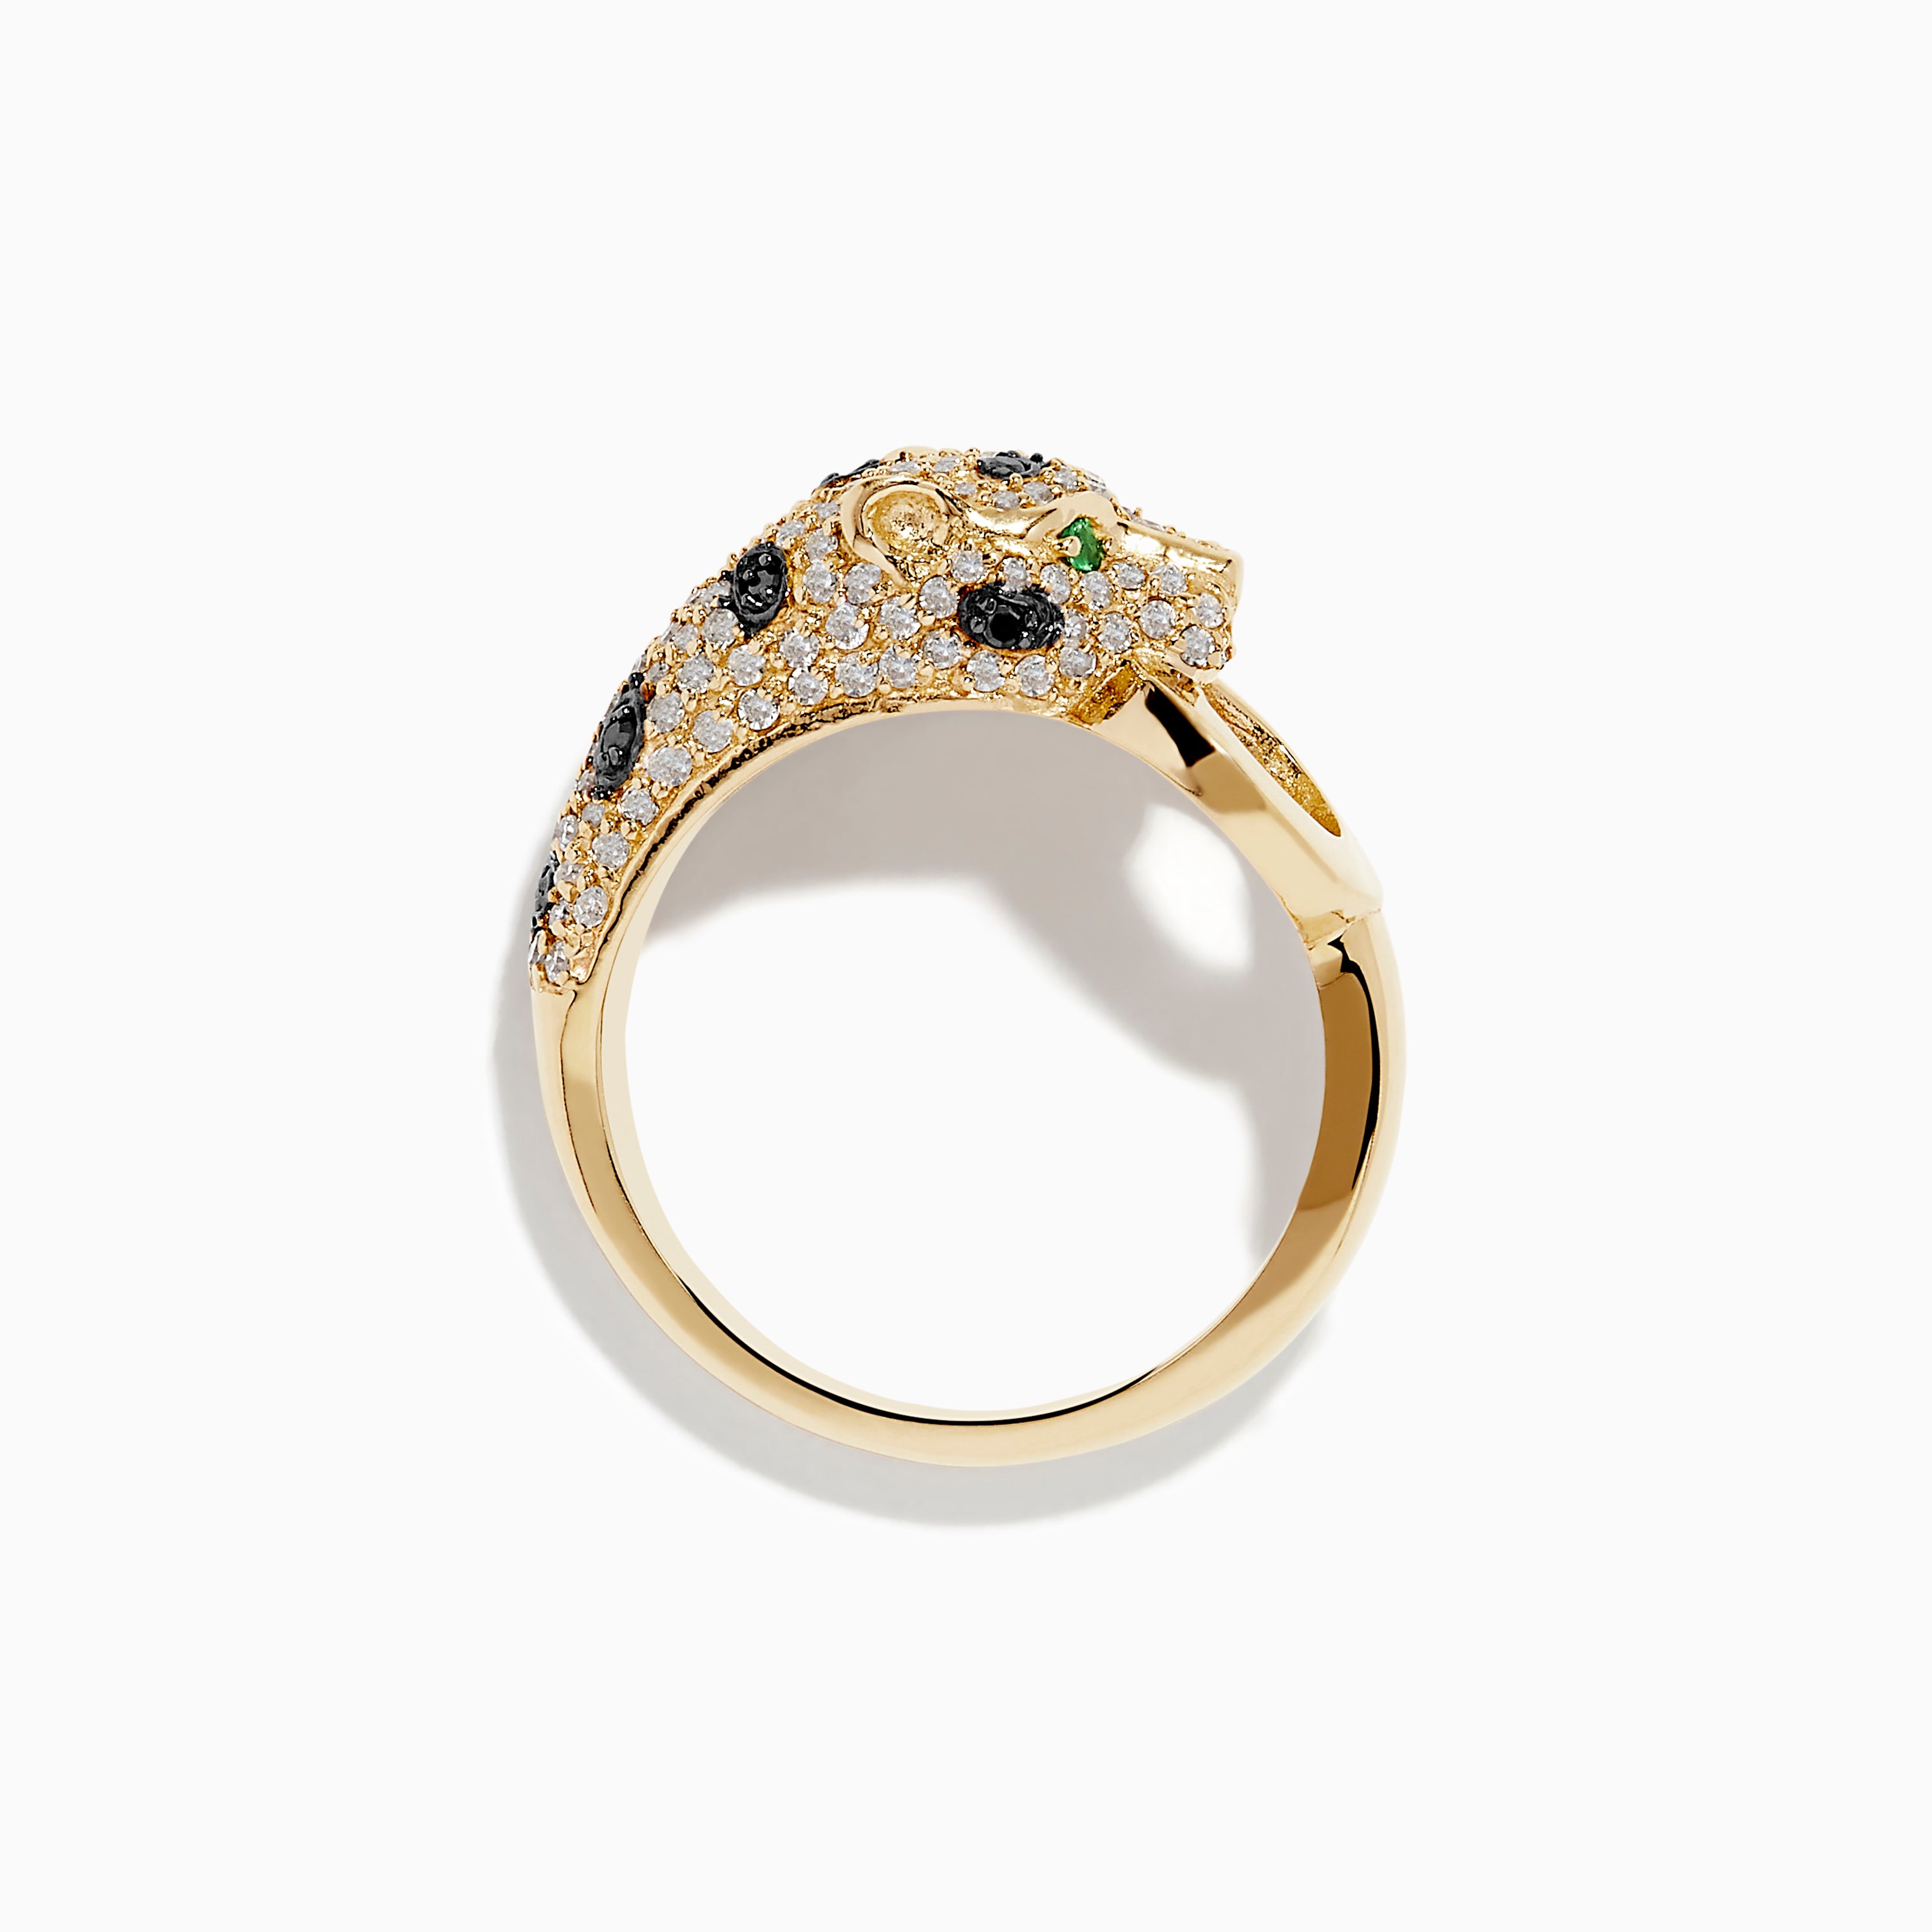 Effy Signature 14K Yellow Gold Diamond and Emerald Ring, 0.67 TCW